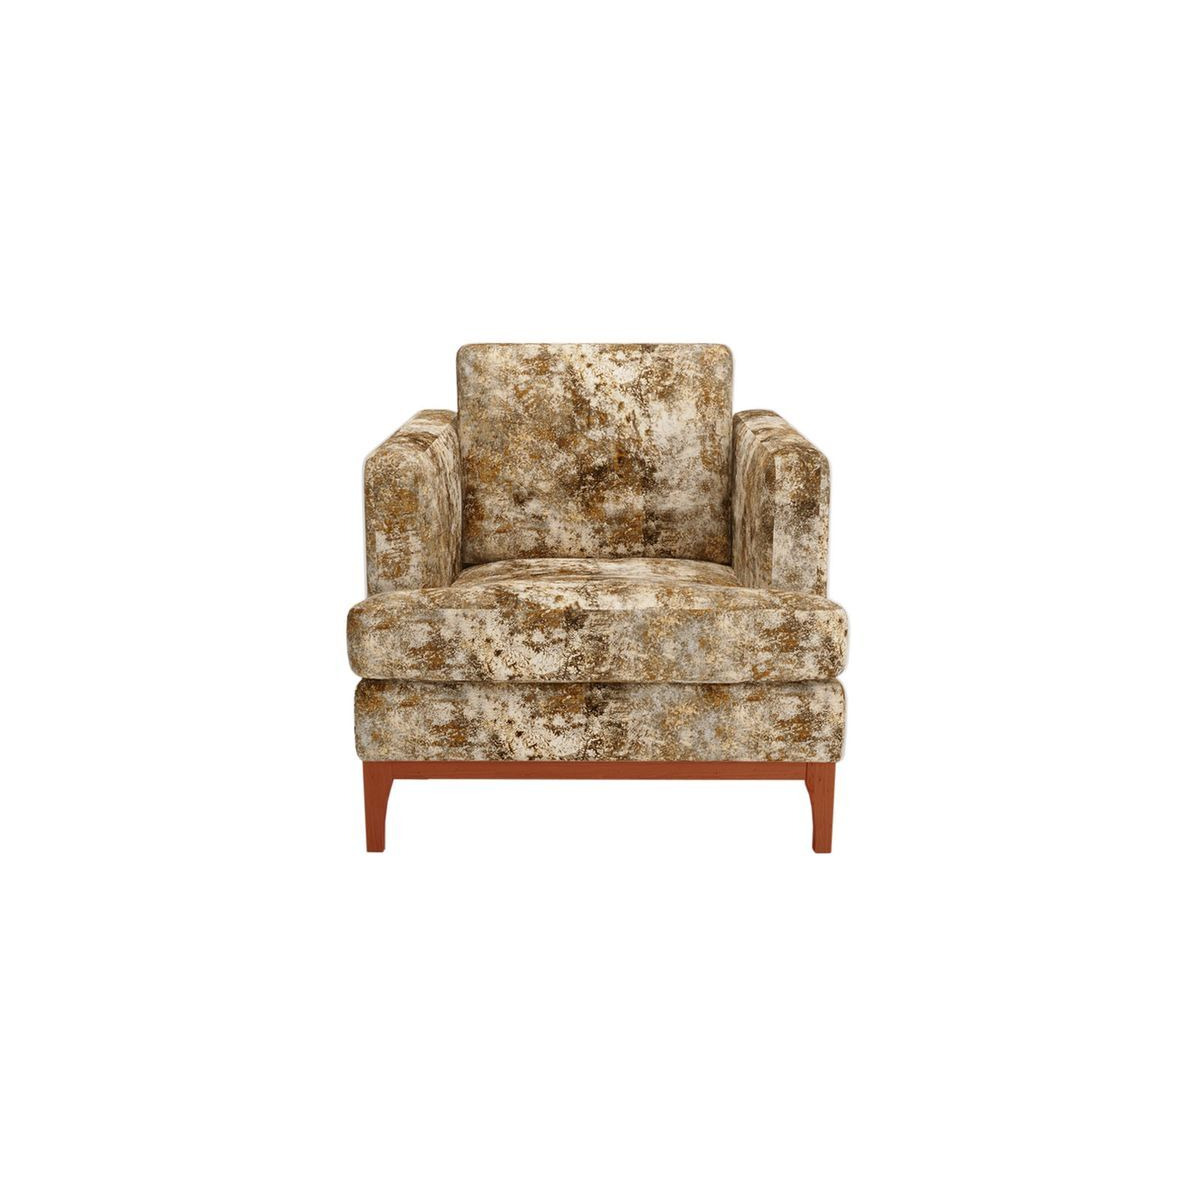 Scarlett Design Armchair, brown, Leg colour: aveo - image 1